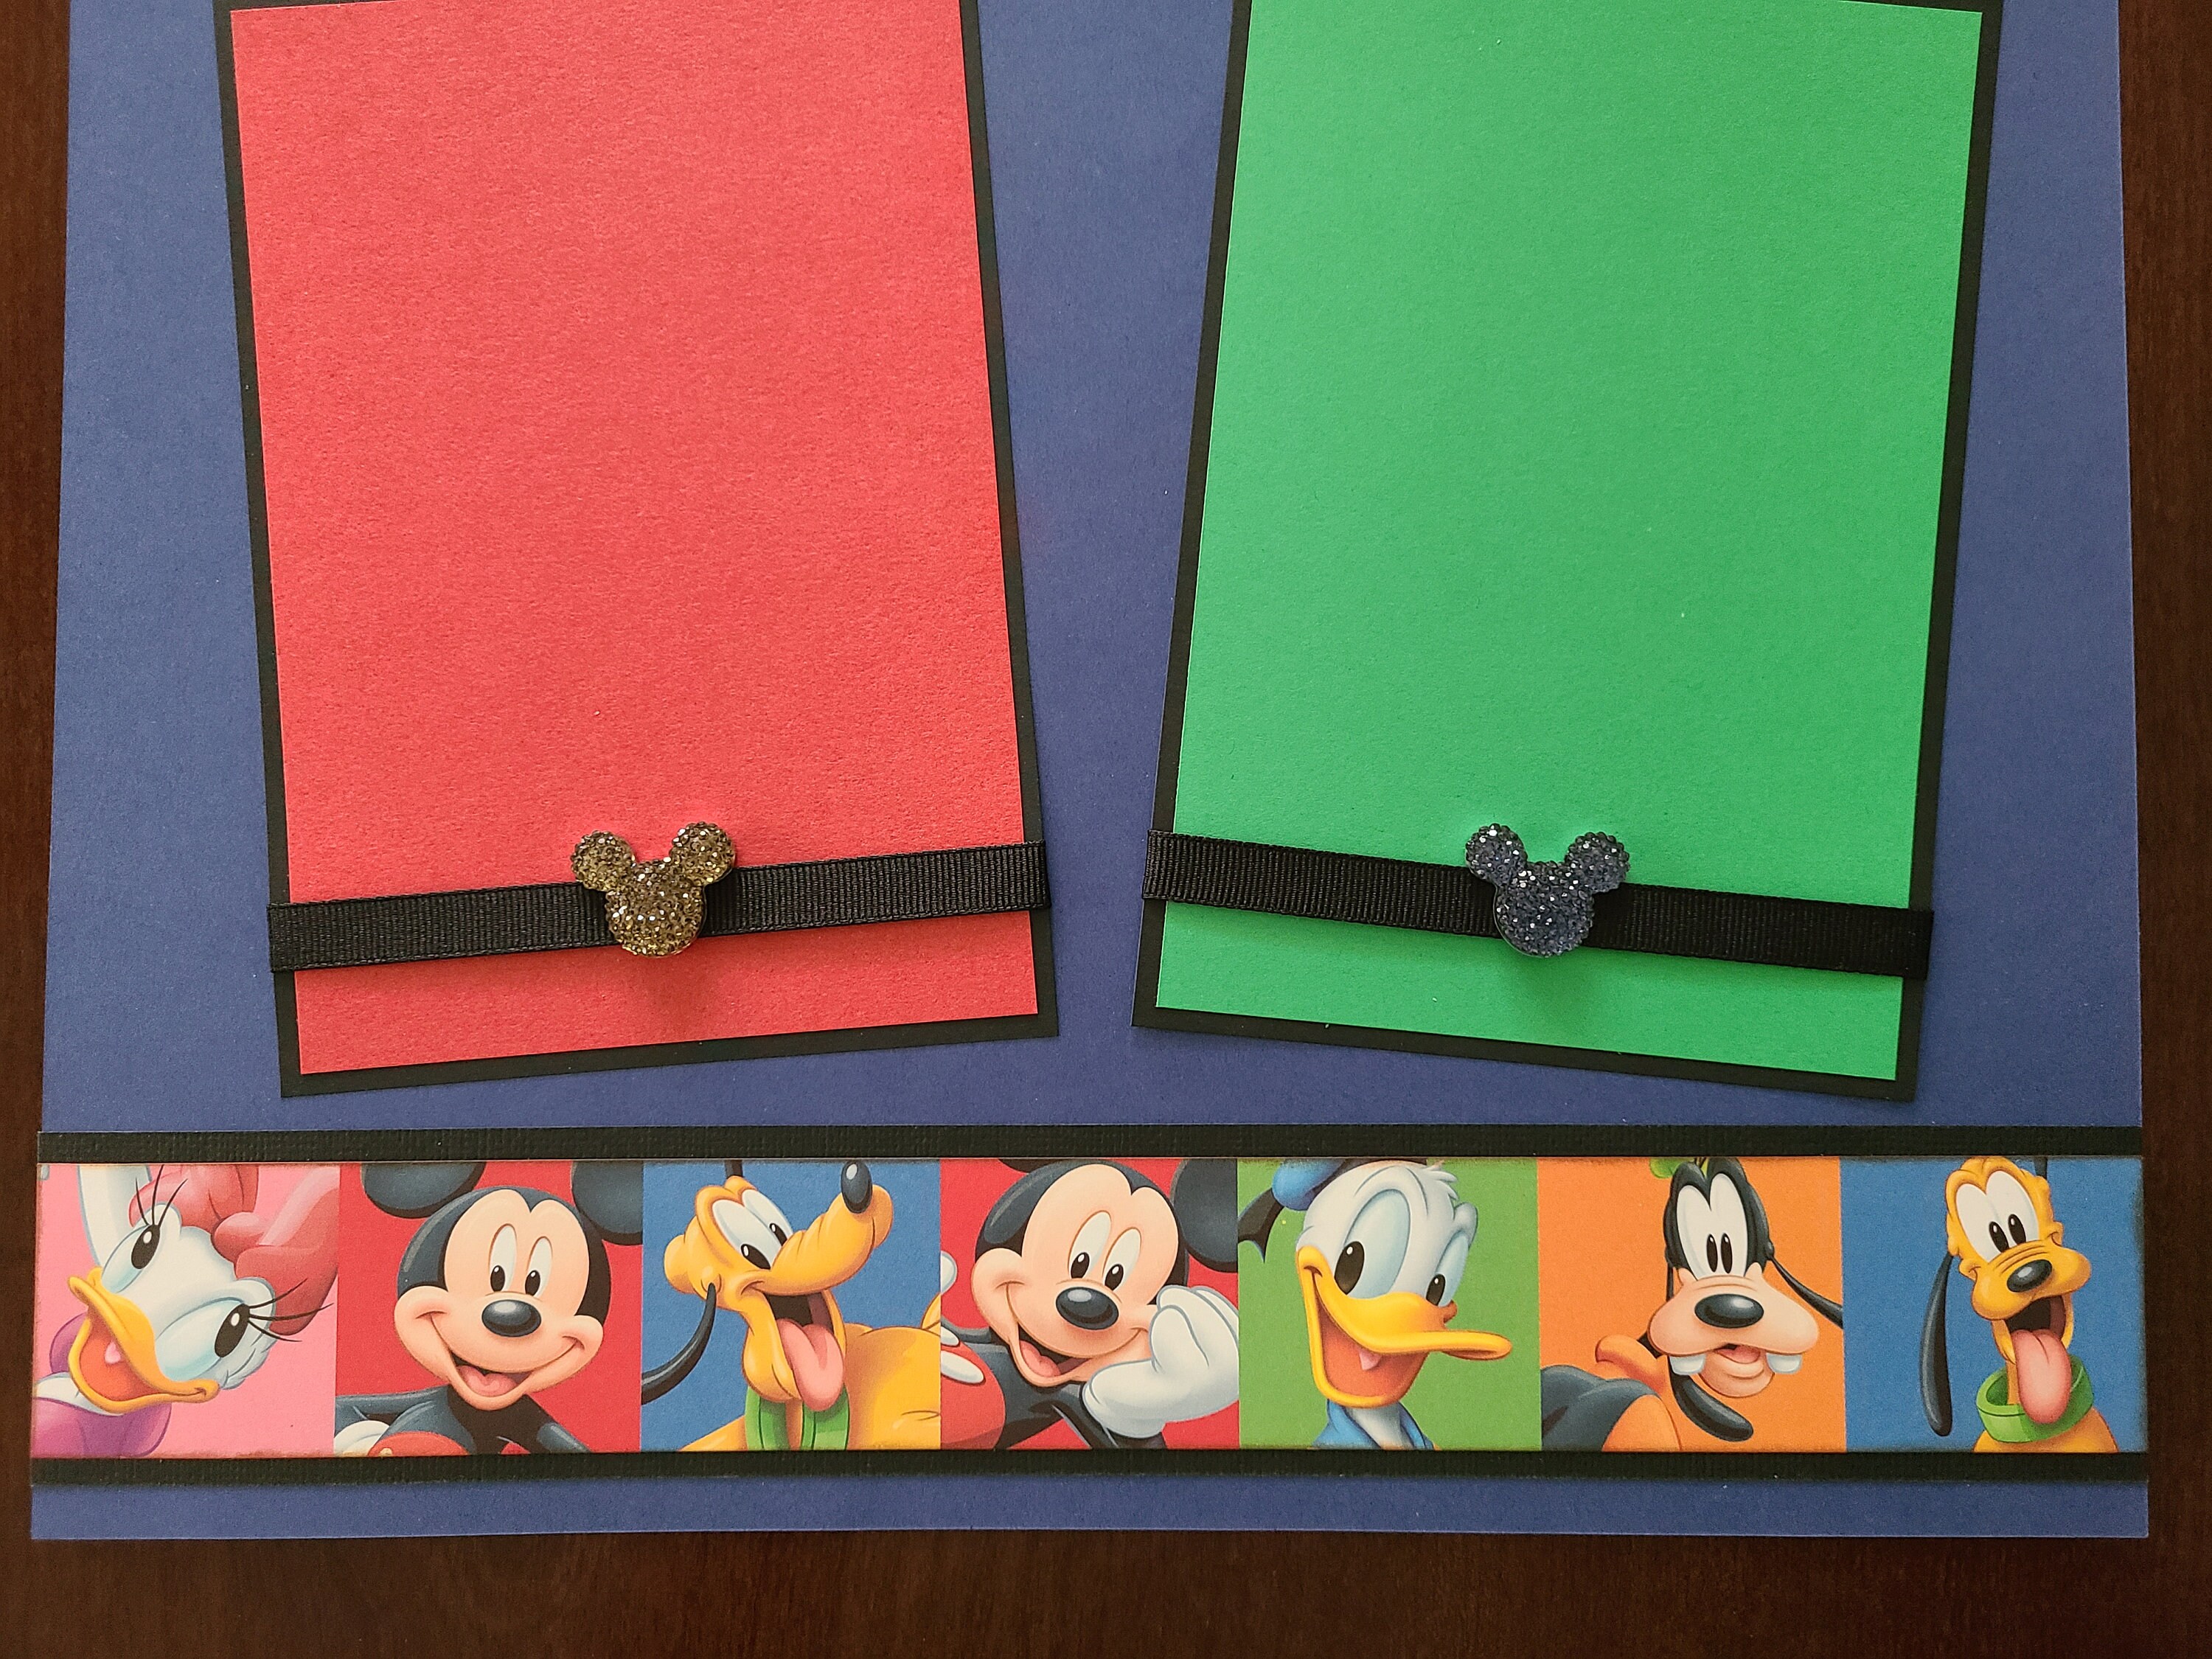 Disney Classic Mickey Mouse Scrapbook Paper 12x12 Sheet - 015586926026